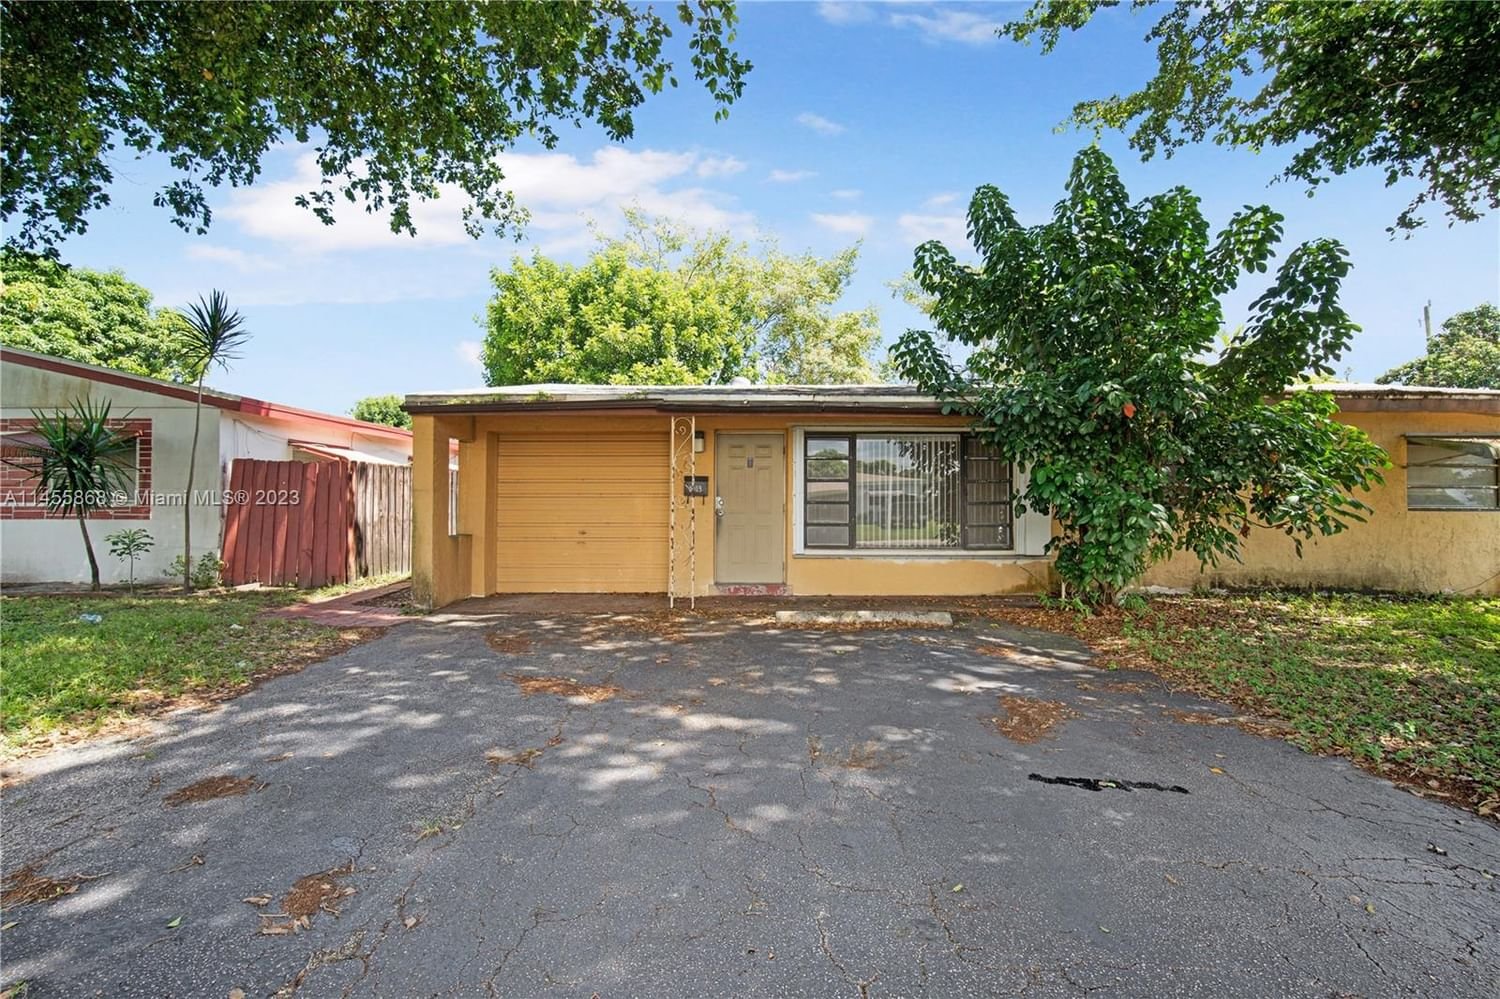 Real estate property located at 3013 67th Way, Broward County, Miramar, FL